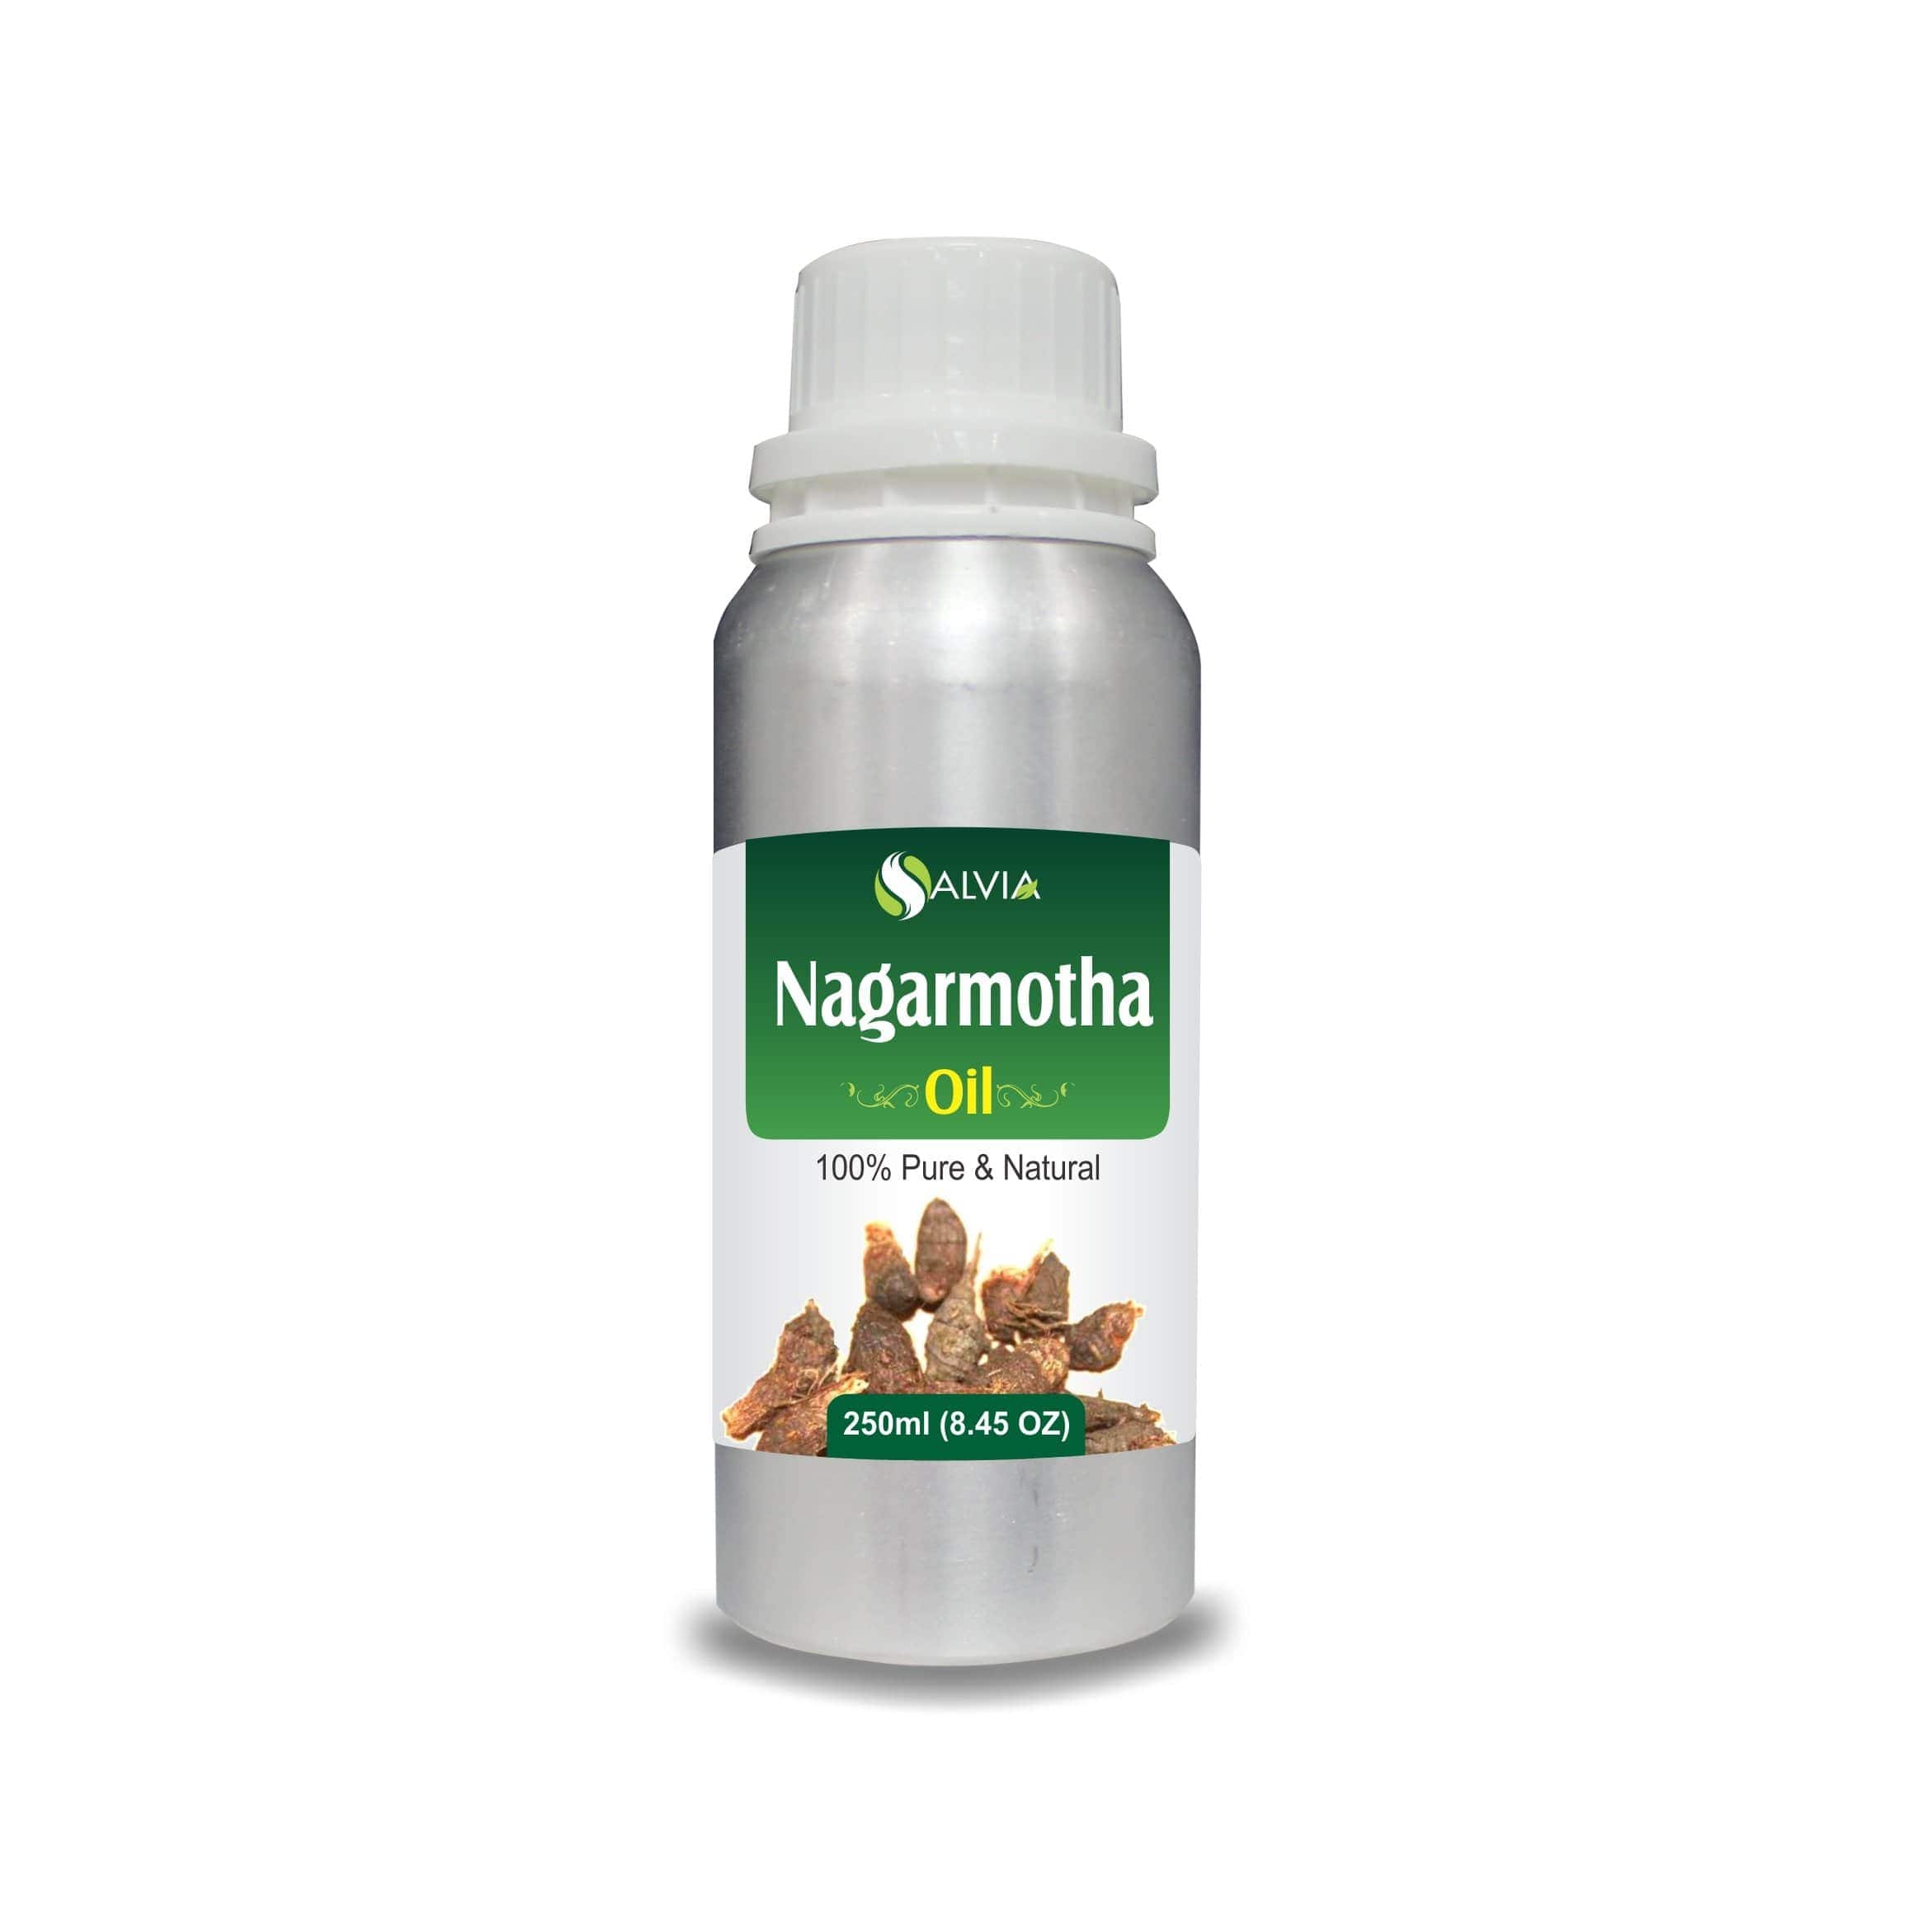 nagarmotha oil benefits for hair